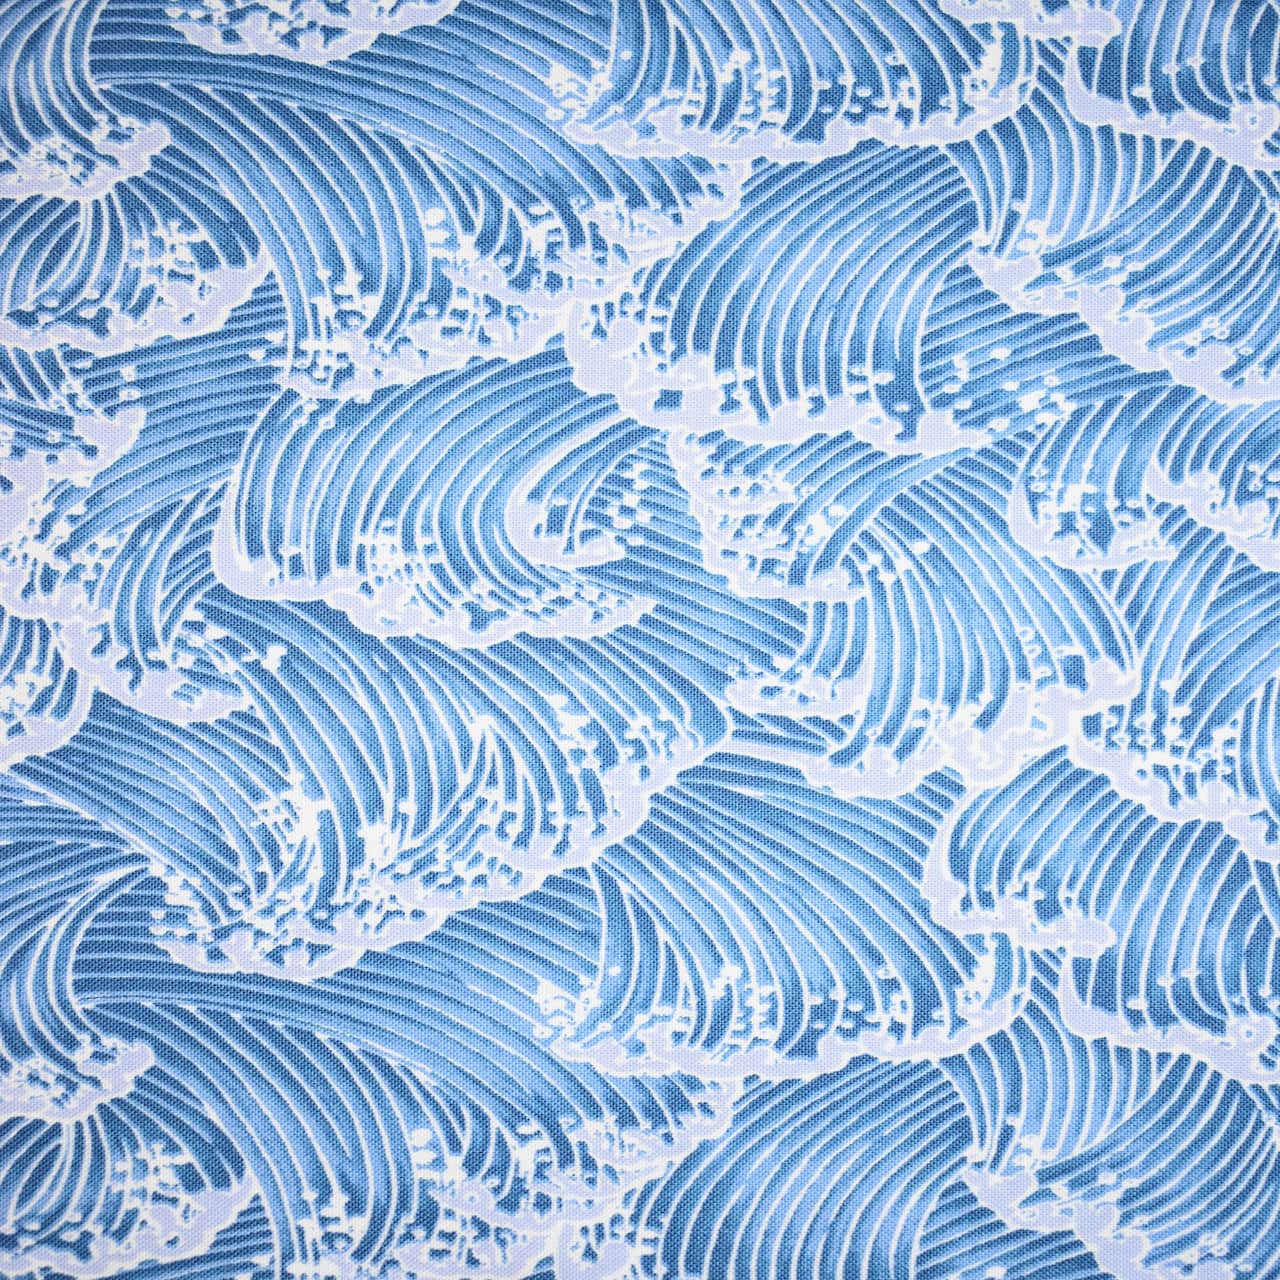 Blue Asian Wave Cotton Fabric